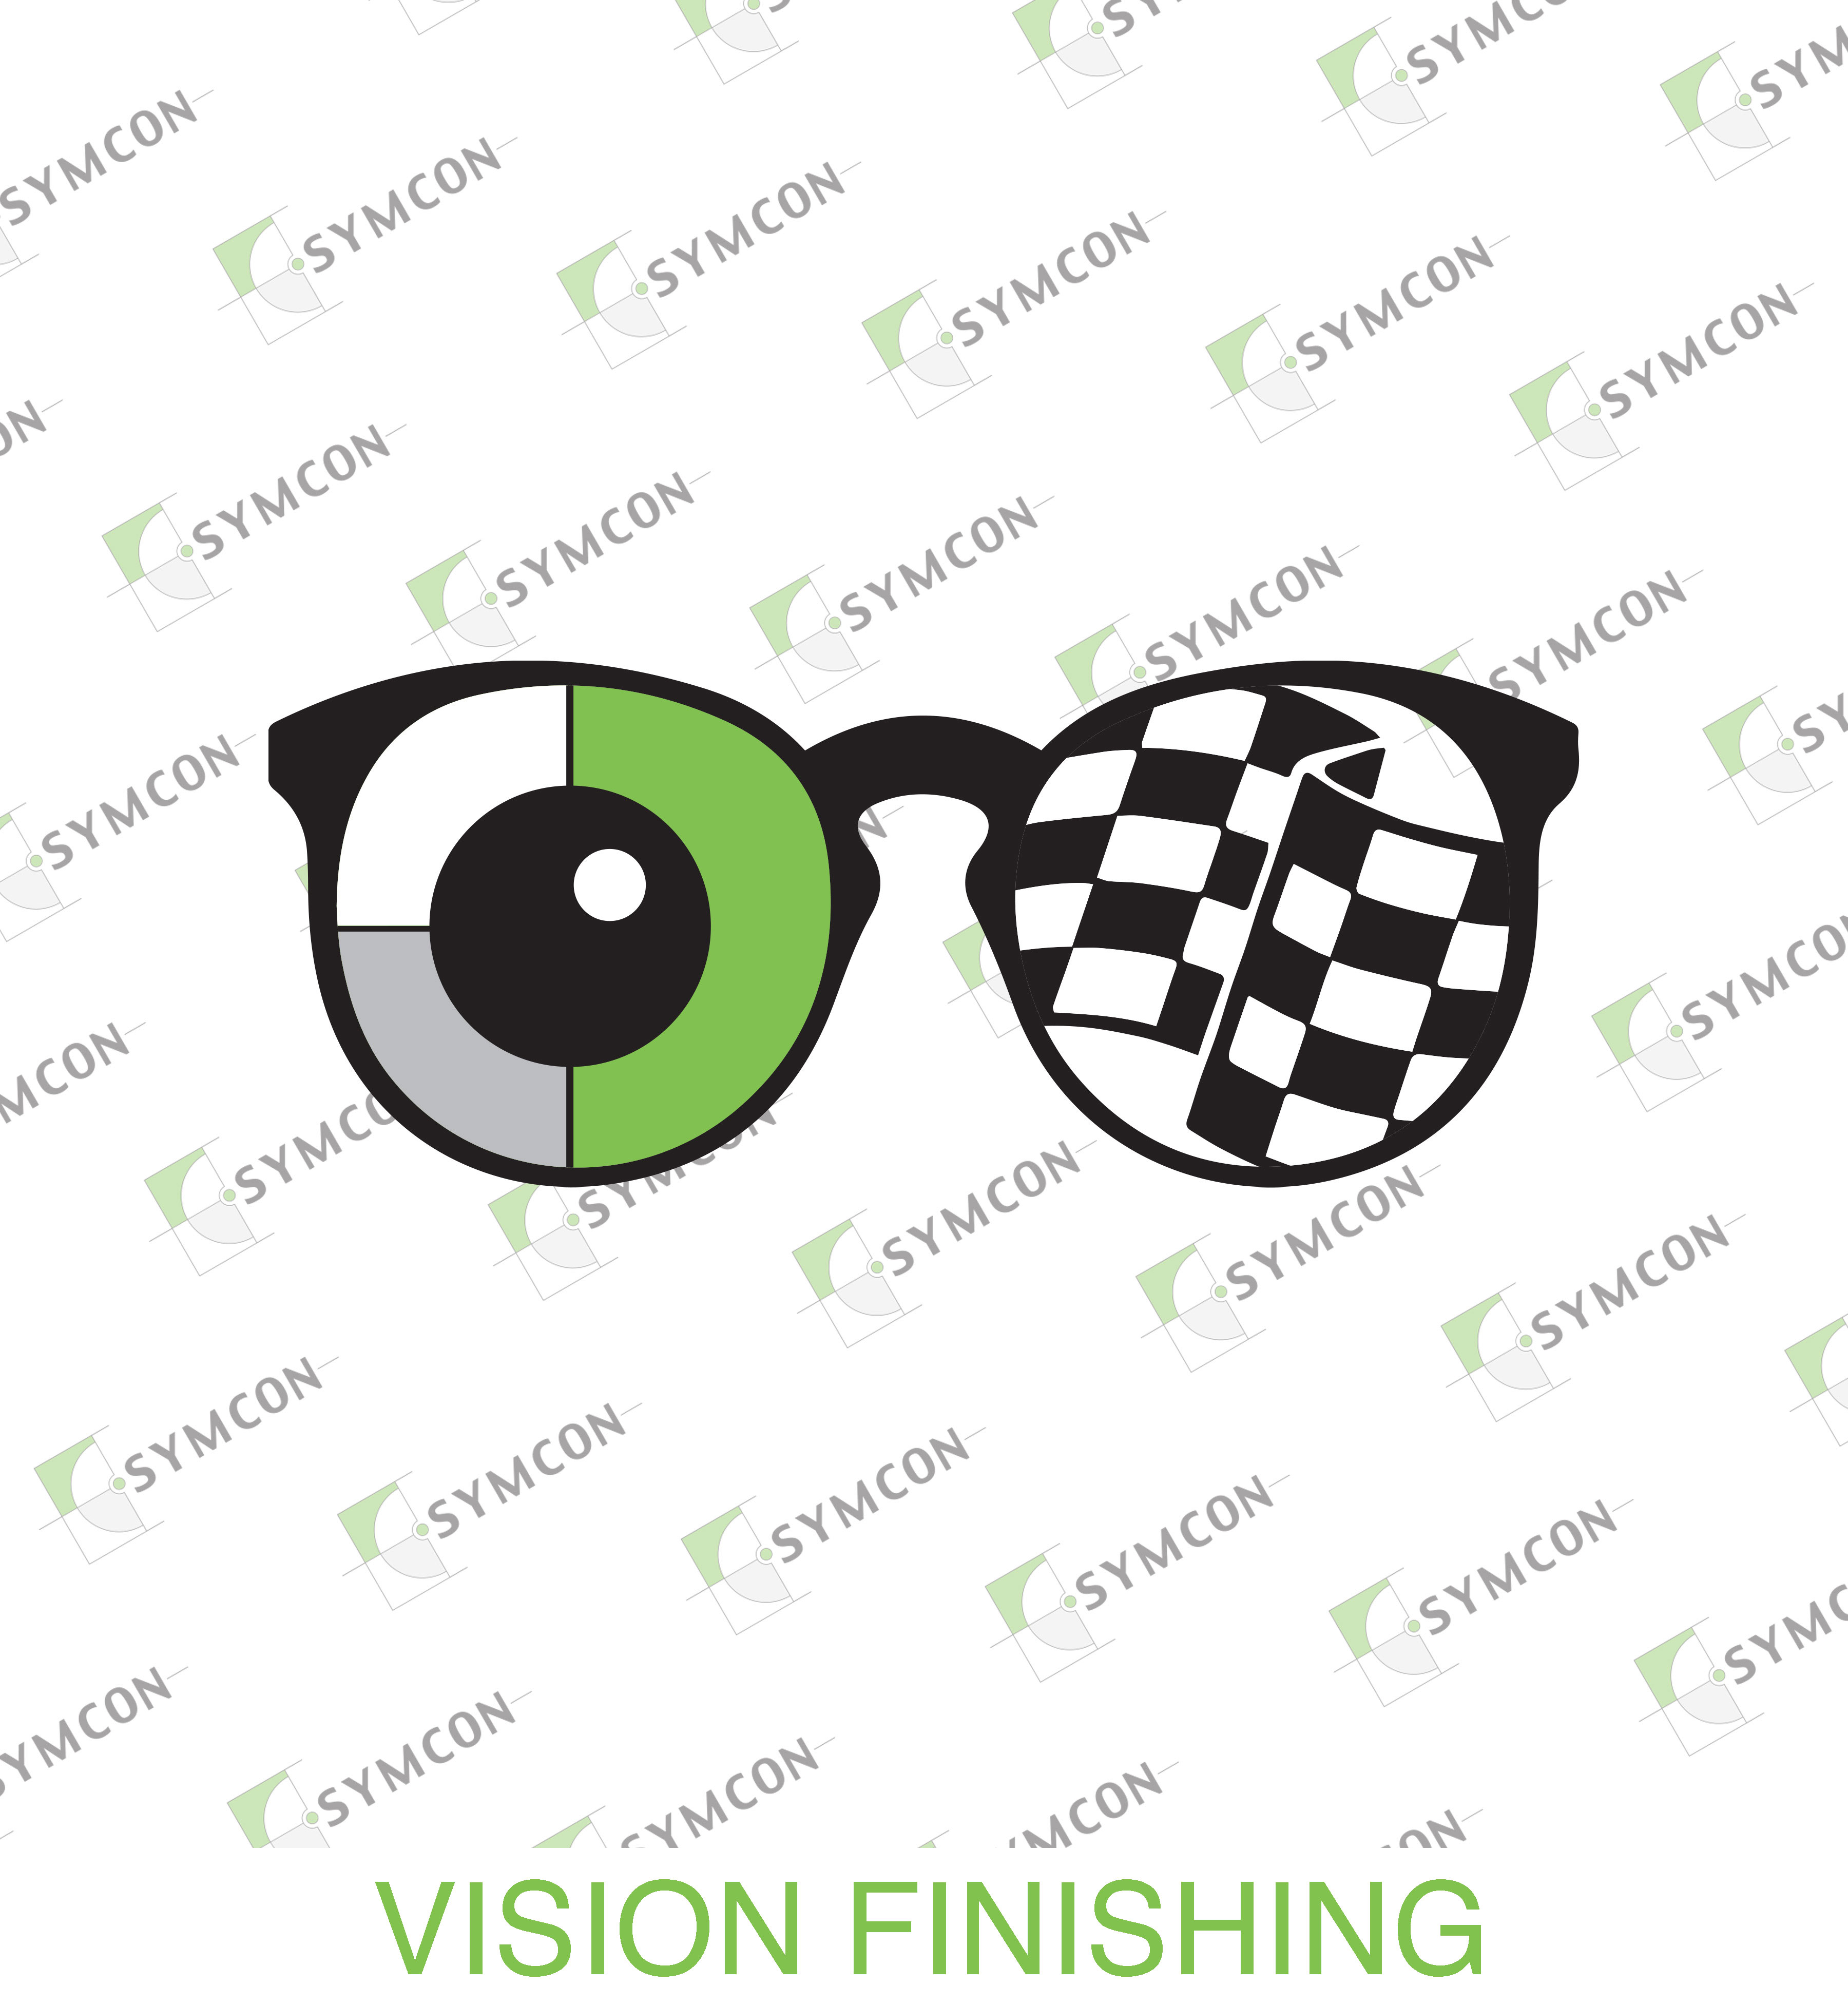 symcon-vision-finishing